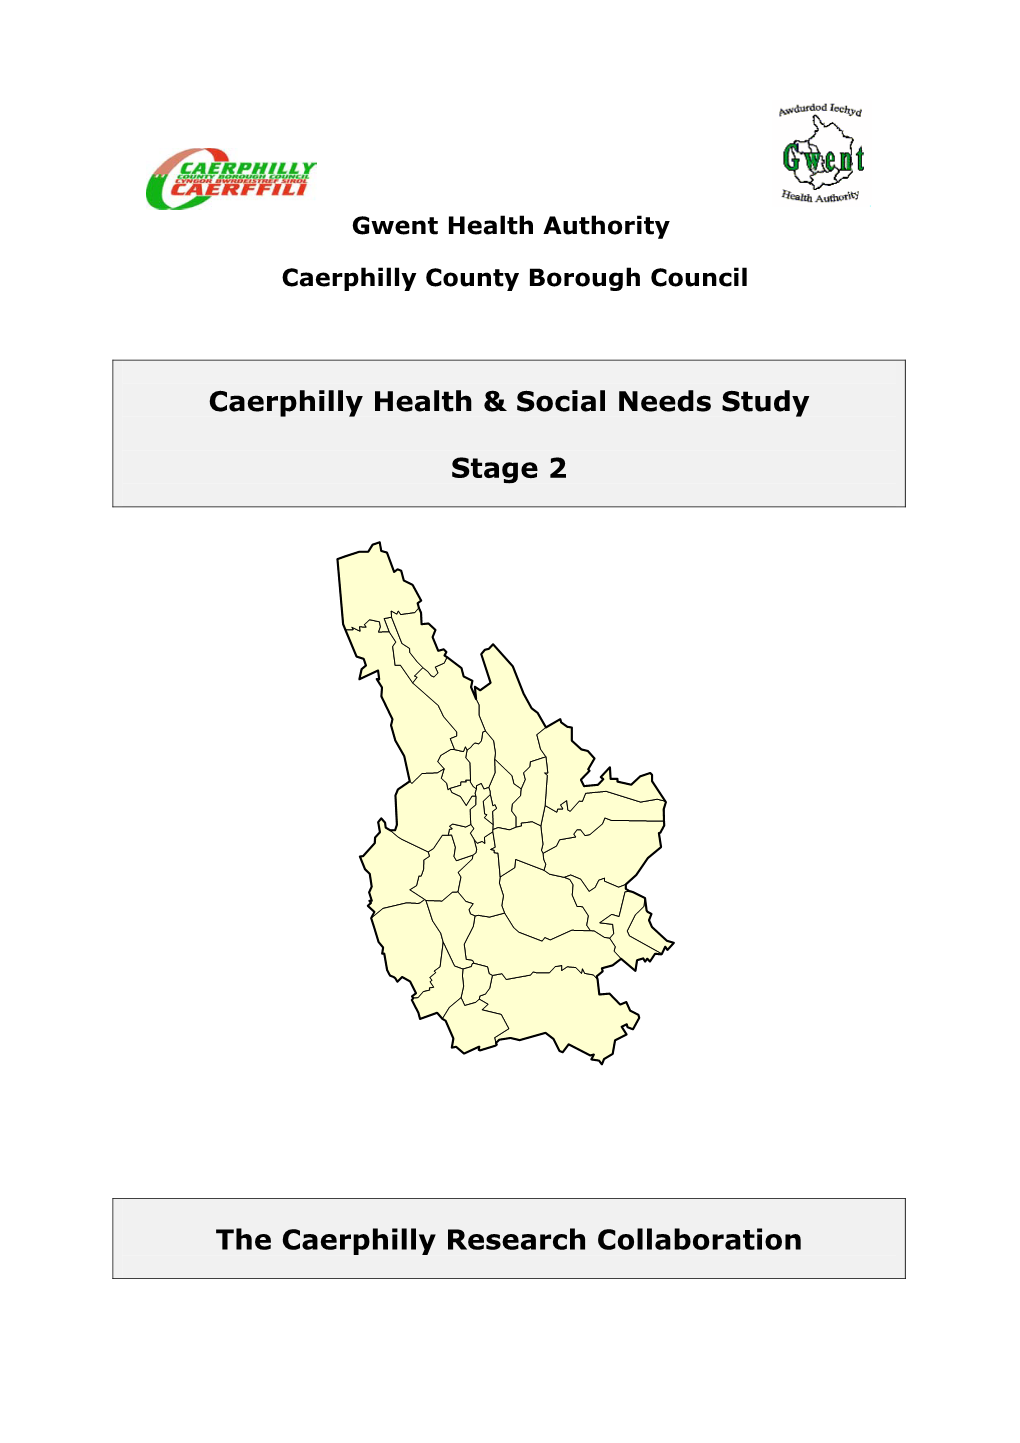 Caerphilly Health & Social Needs Study